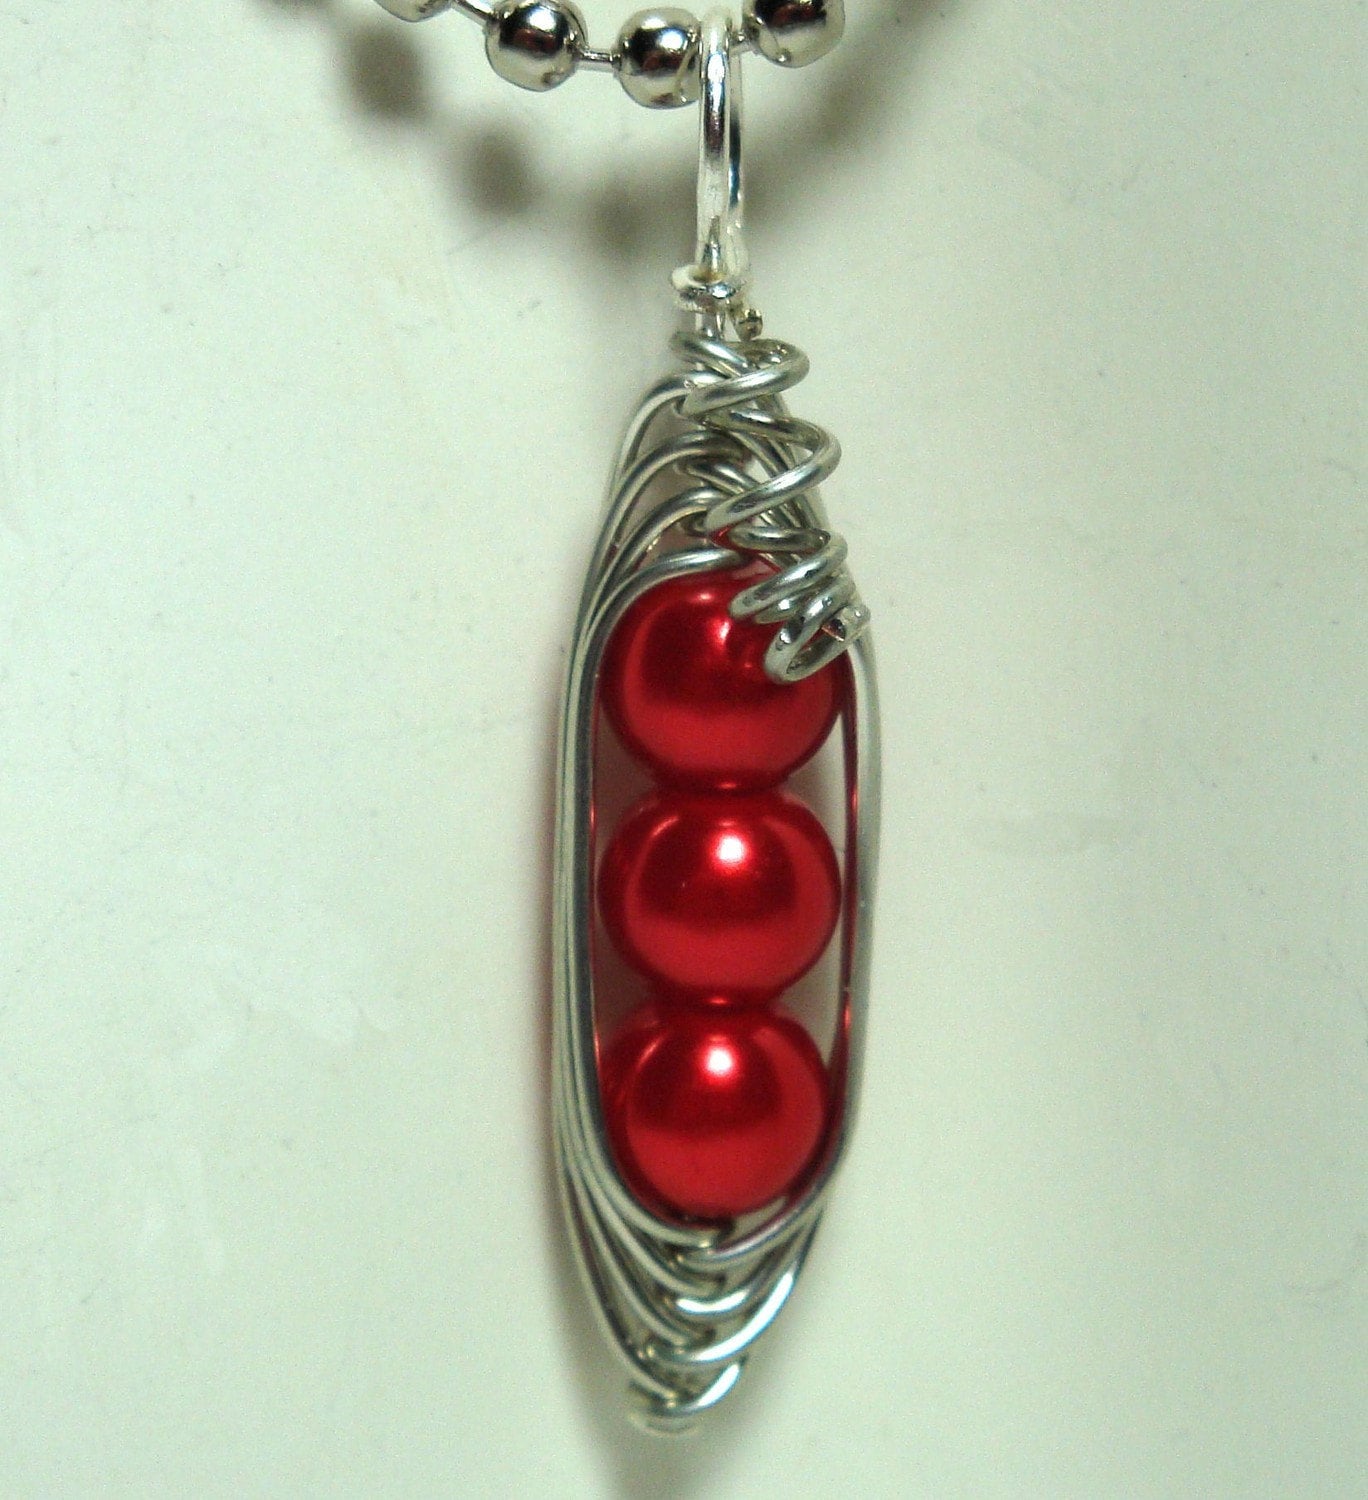   Necklace on Pea Pod Necklace  Three Peas  Silver  Red Pearl  Wire  Unique Jewelry